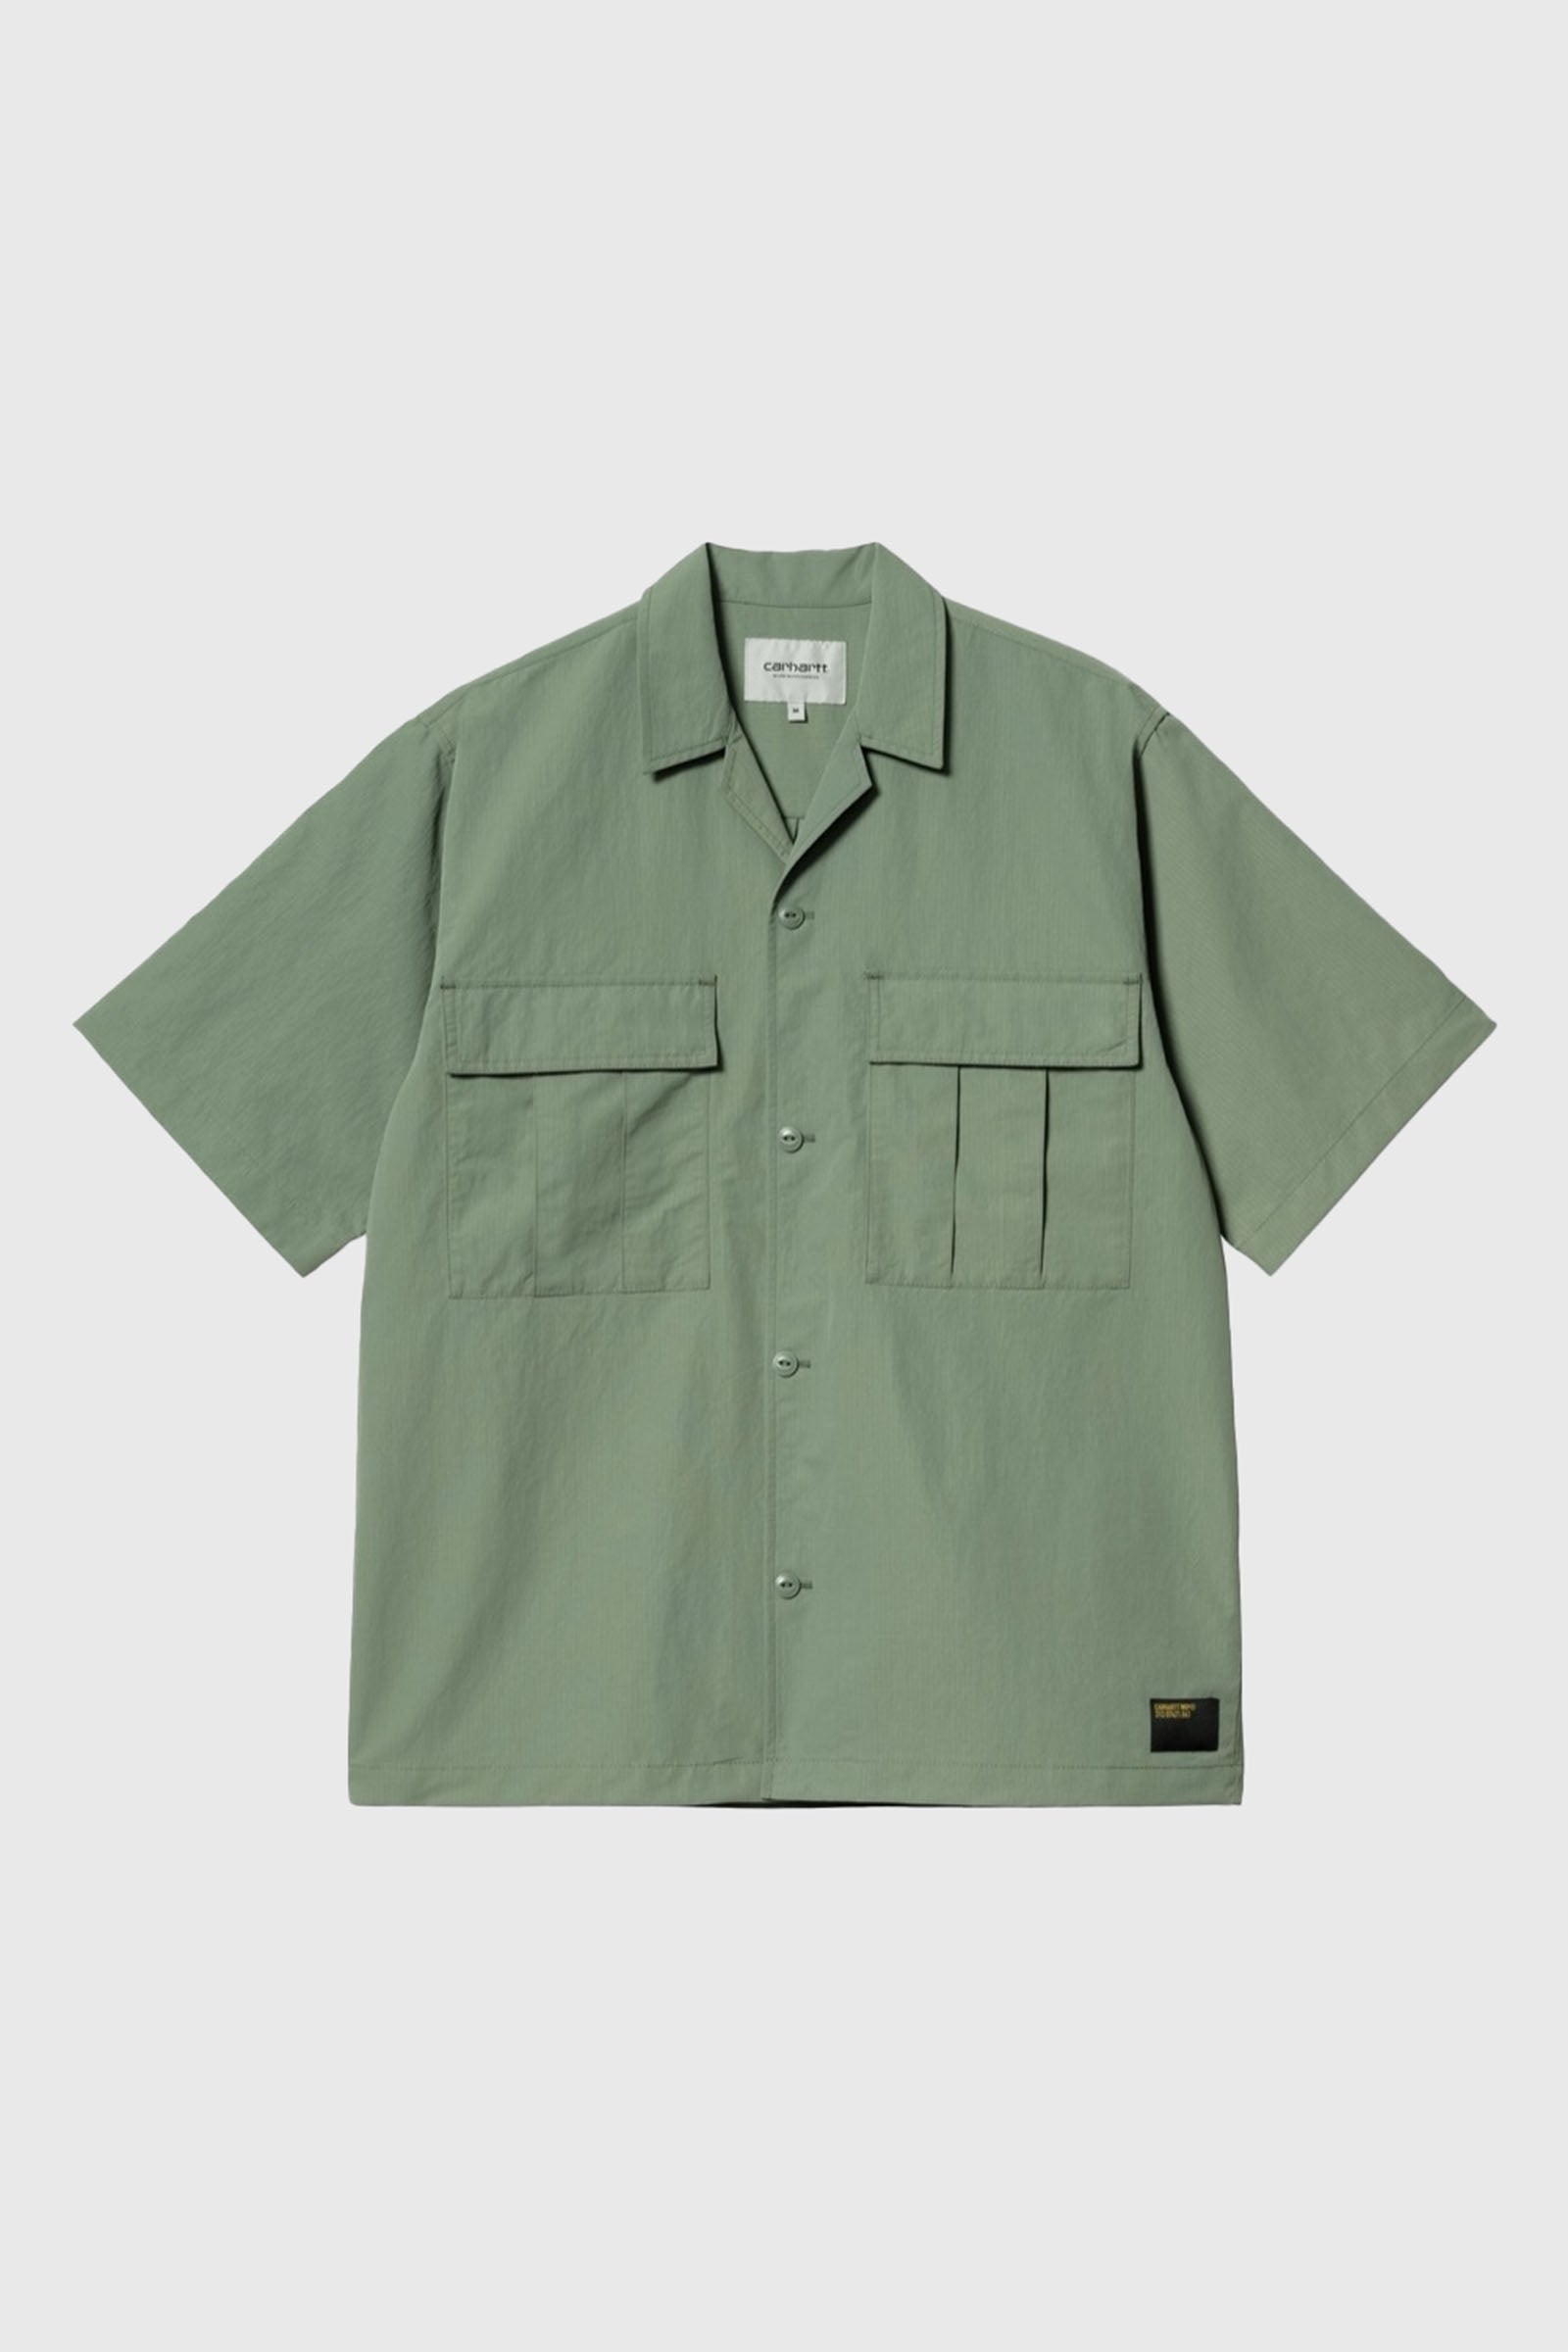 Carhartt Wip Camicia S/s Evers Verde Uomo - 1